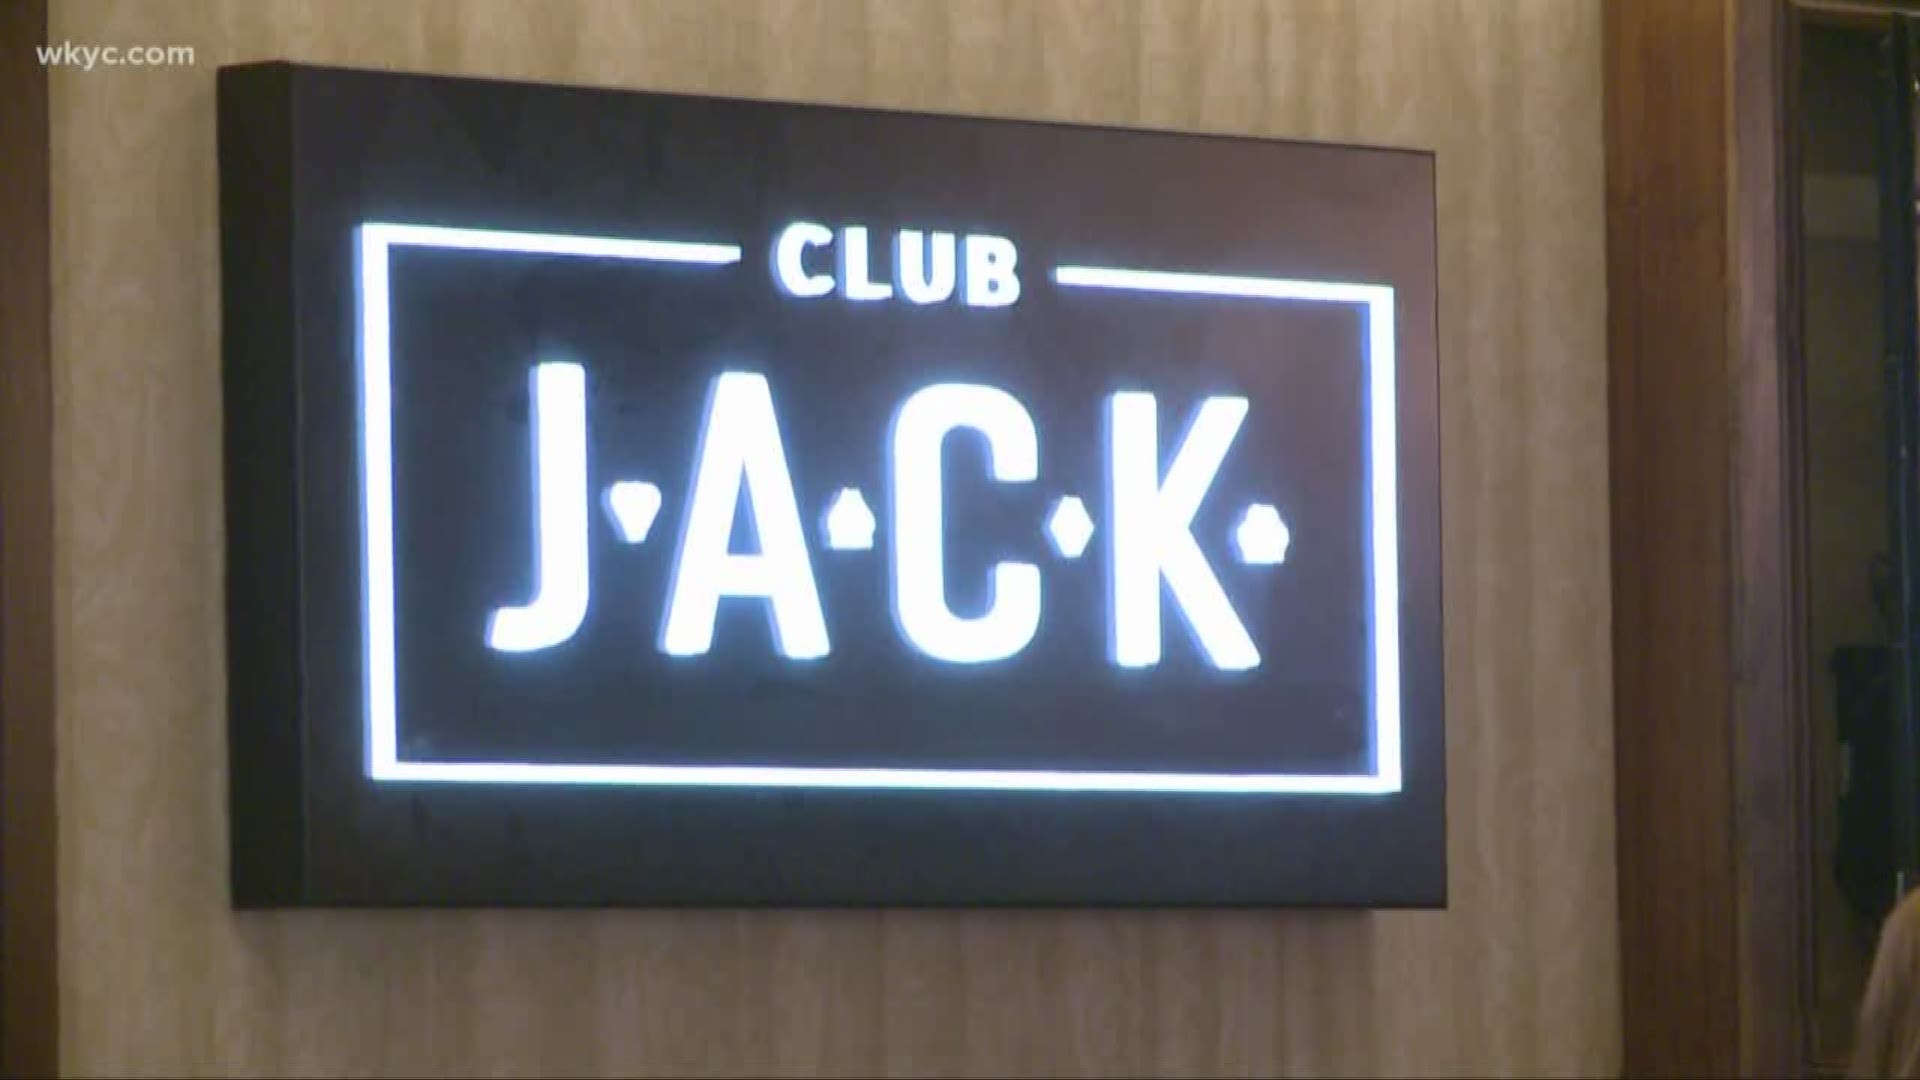 Jack Casino, thistledown have been sold